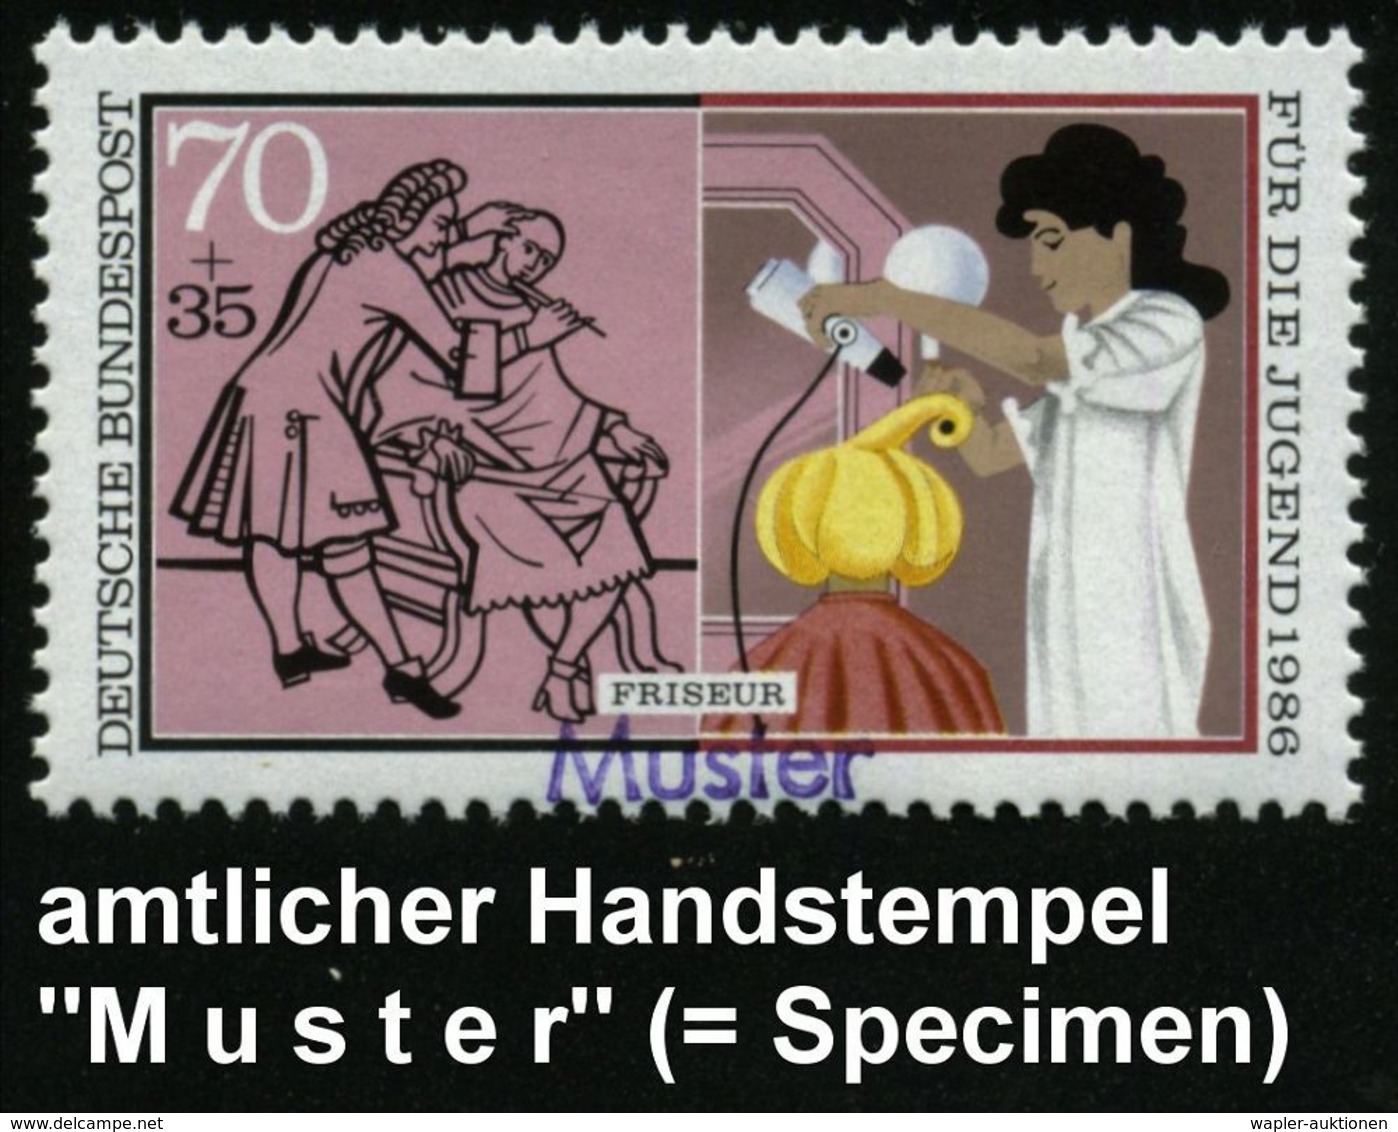 HAAR / BART / RASUR / FRISEUR : B.R.D. 1986 (Apr.) 70 Pf.+ 35 Pf. Jugendmarke "Friseur-Handwerk" Mit Amtl. Handstempel   - Farmacia